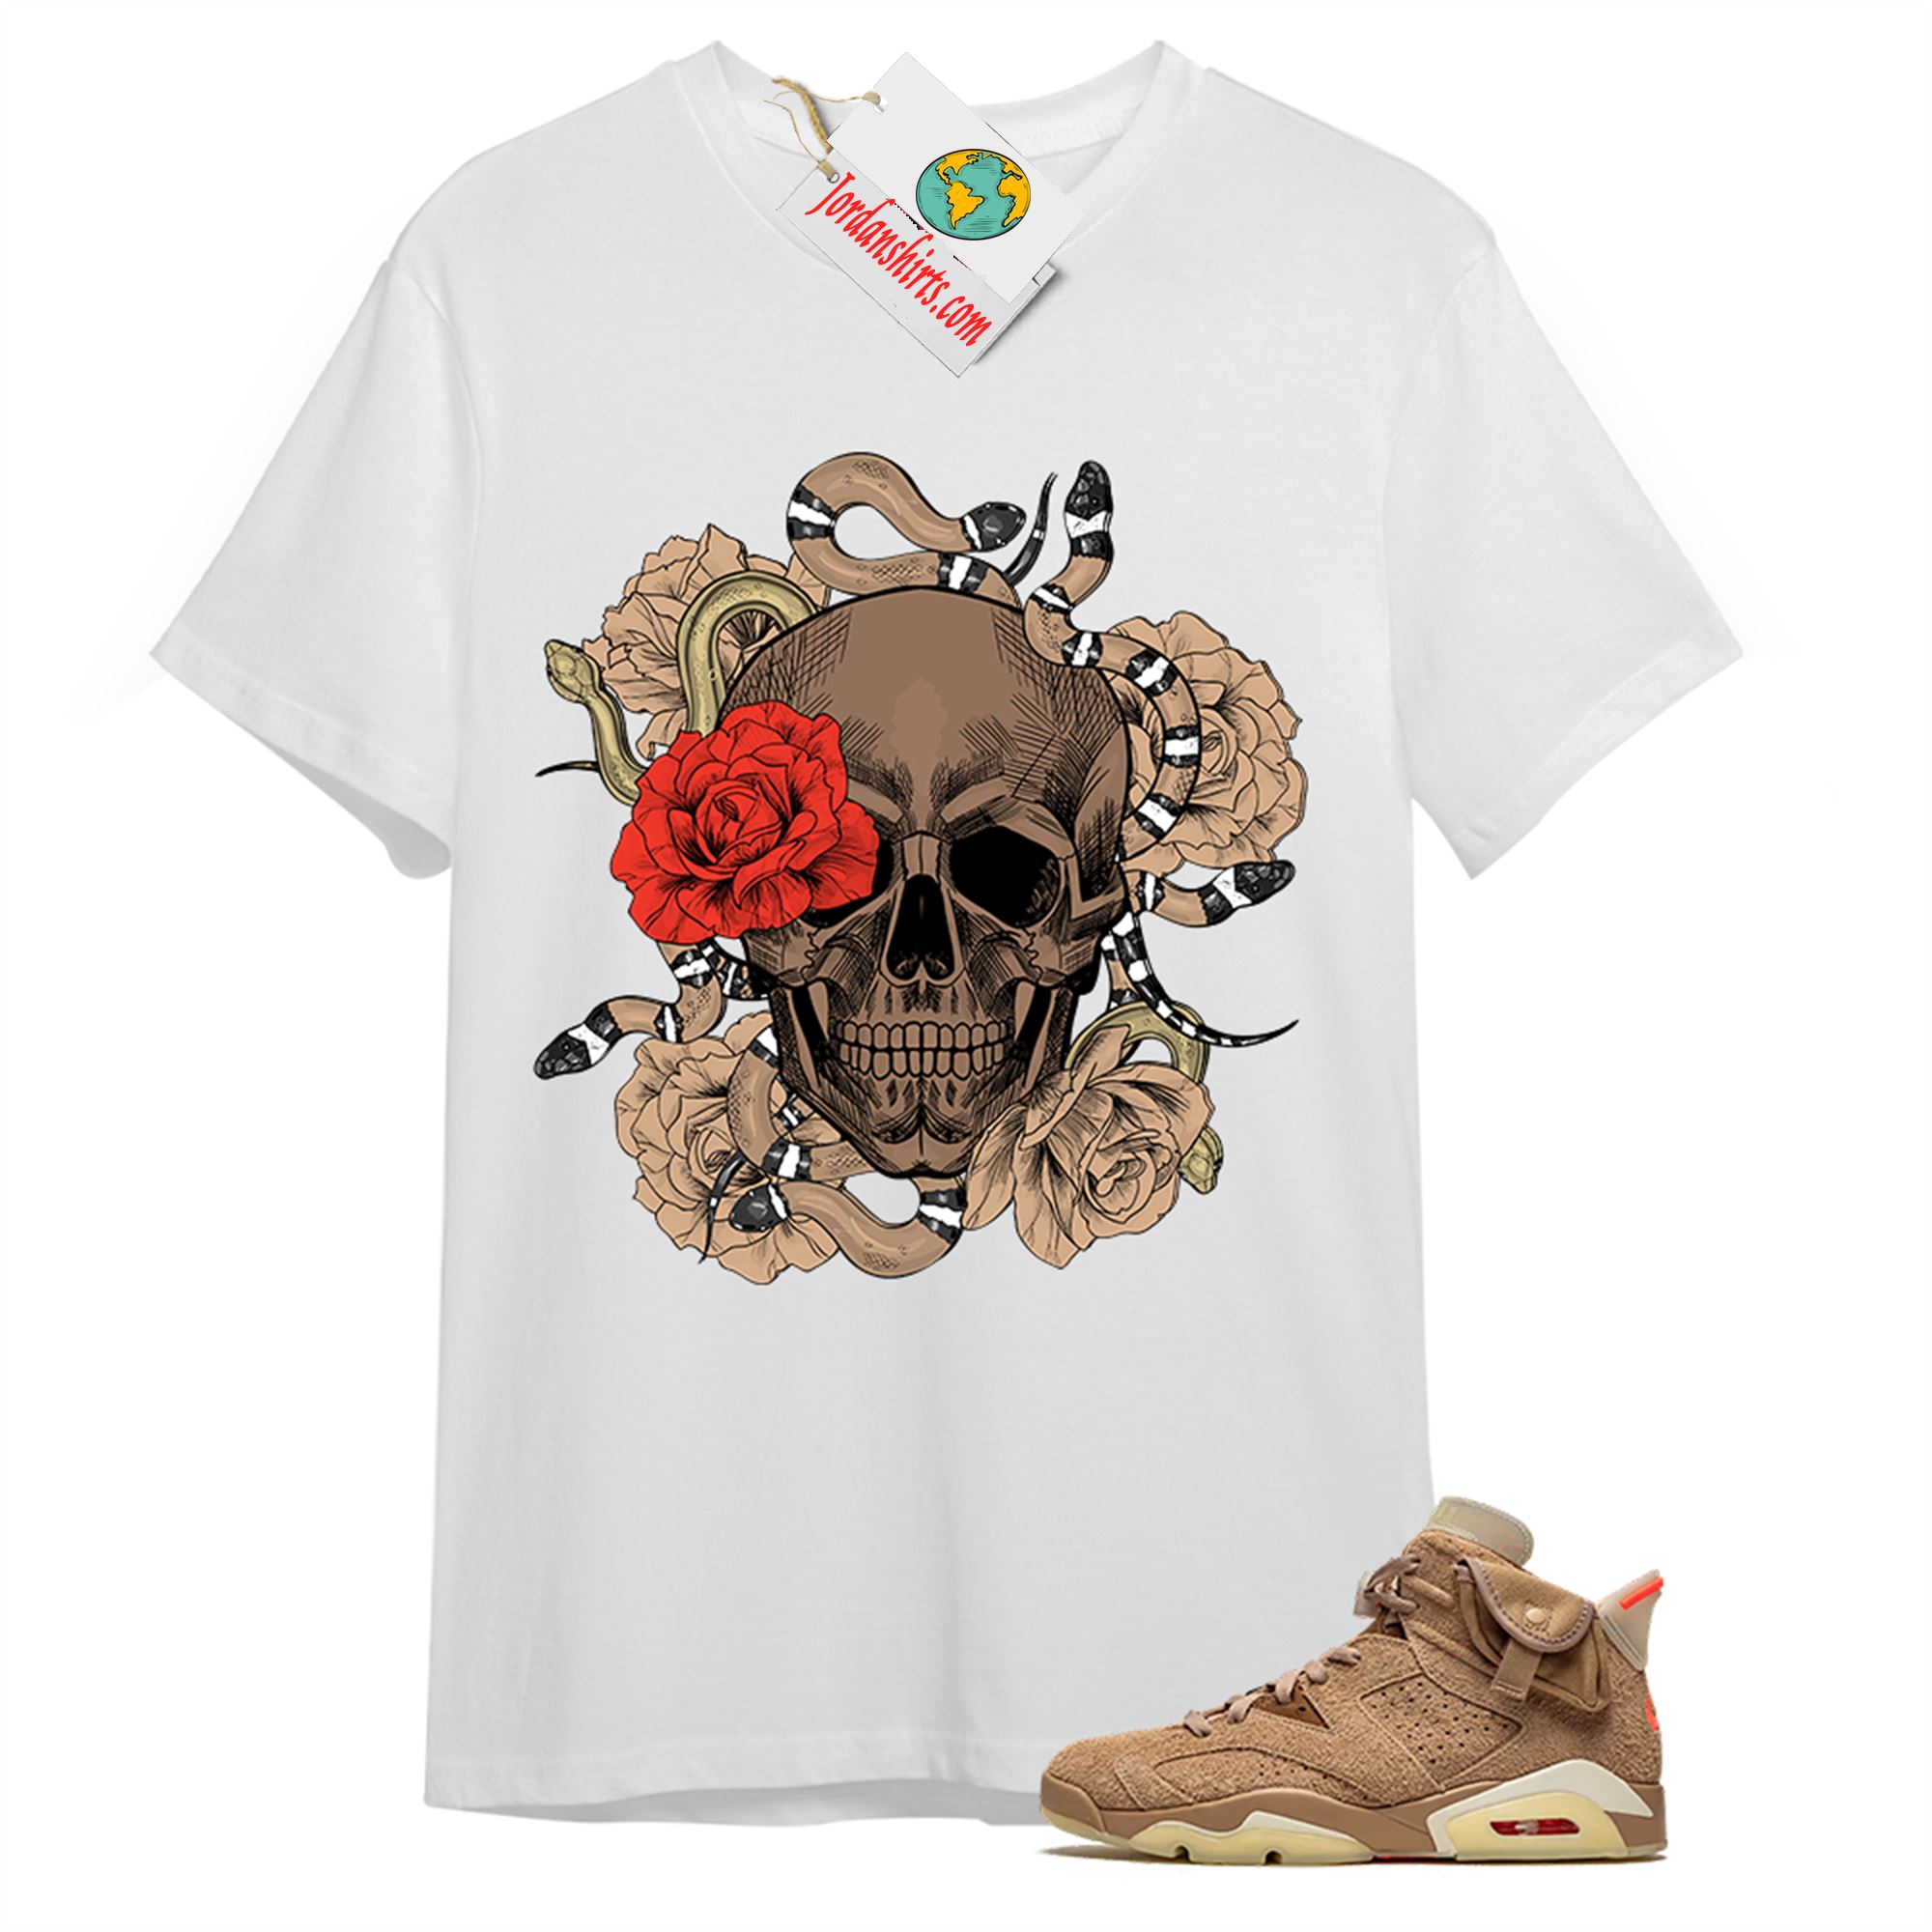 Jordan 6 Shirt, Snake Skull Rose White T-shirt Air Jordan 6 Travis Scott 6s Plus Size Up To 5xl